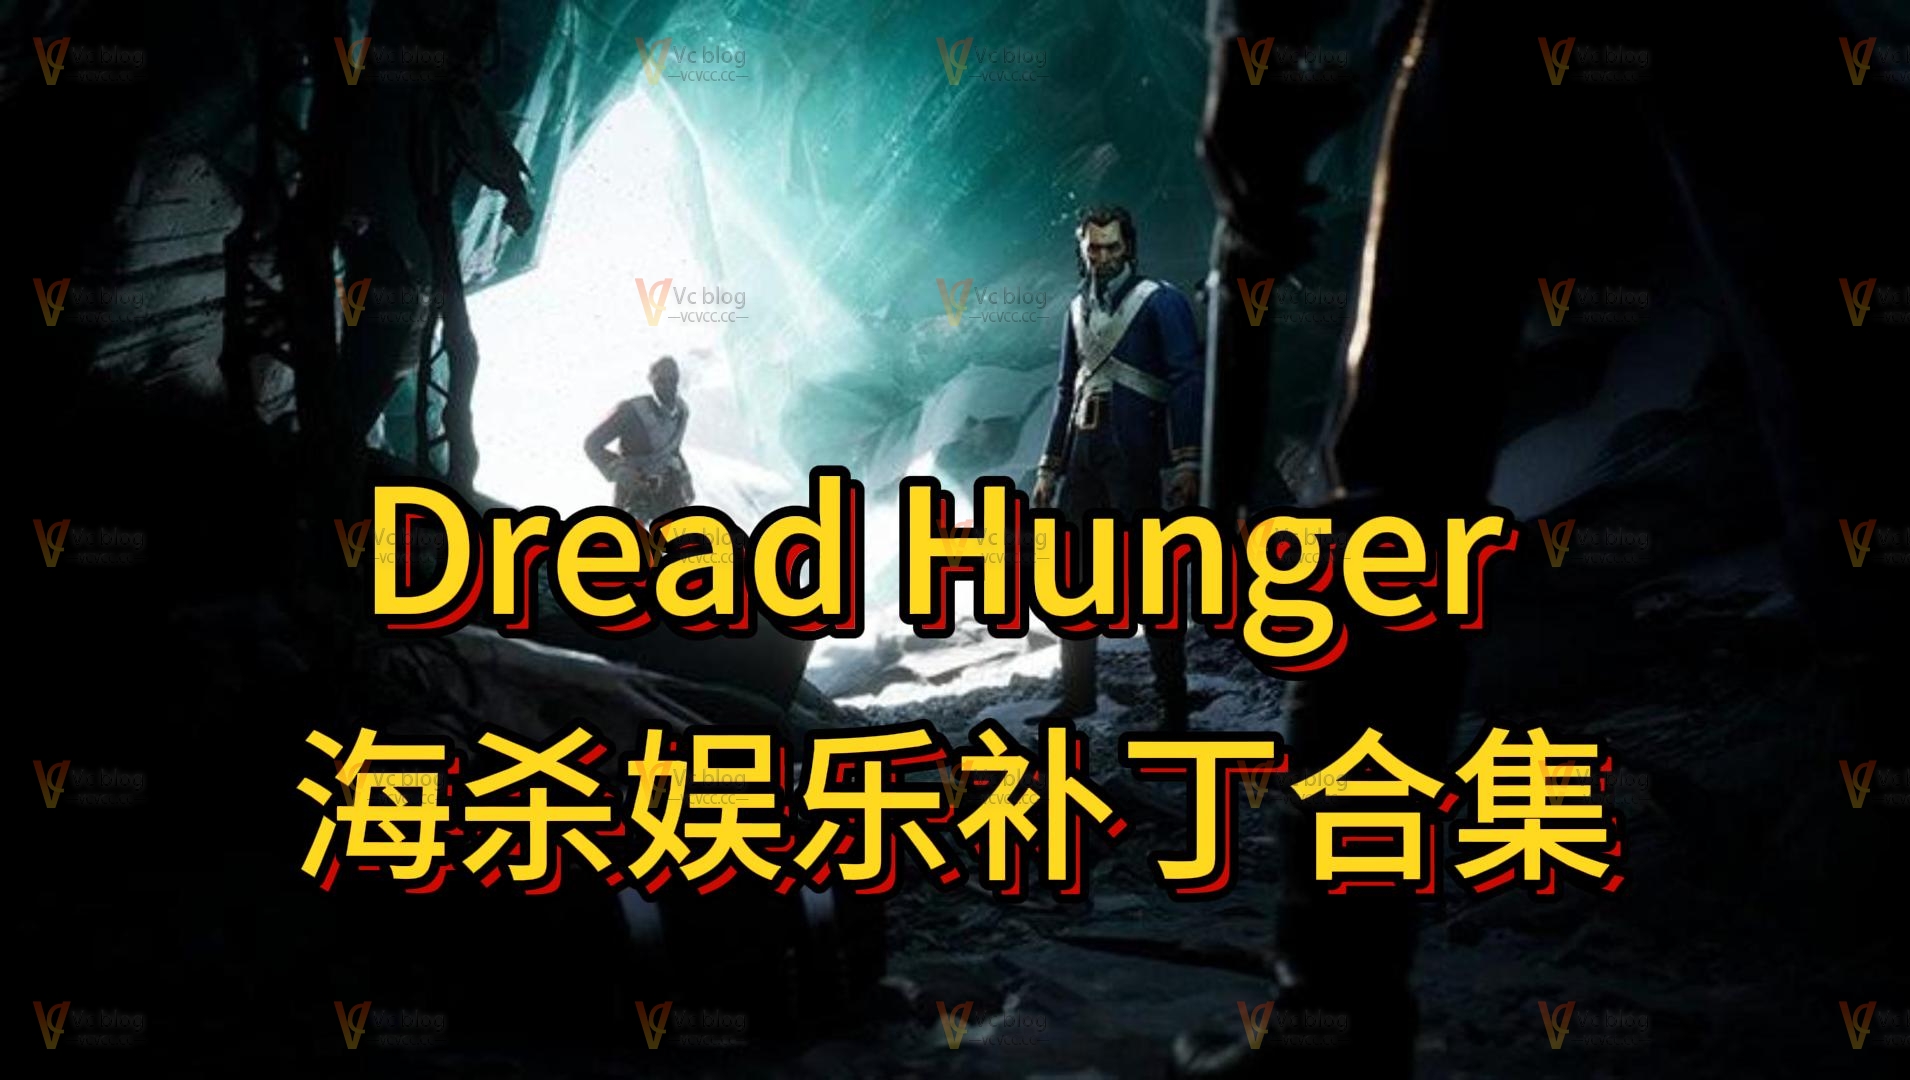 Dread Hunger 海杀娱乐补丁合集-Vc博客